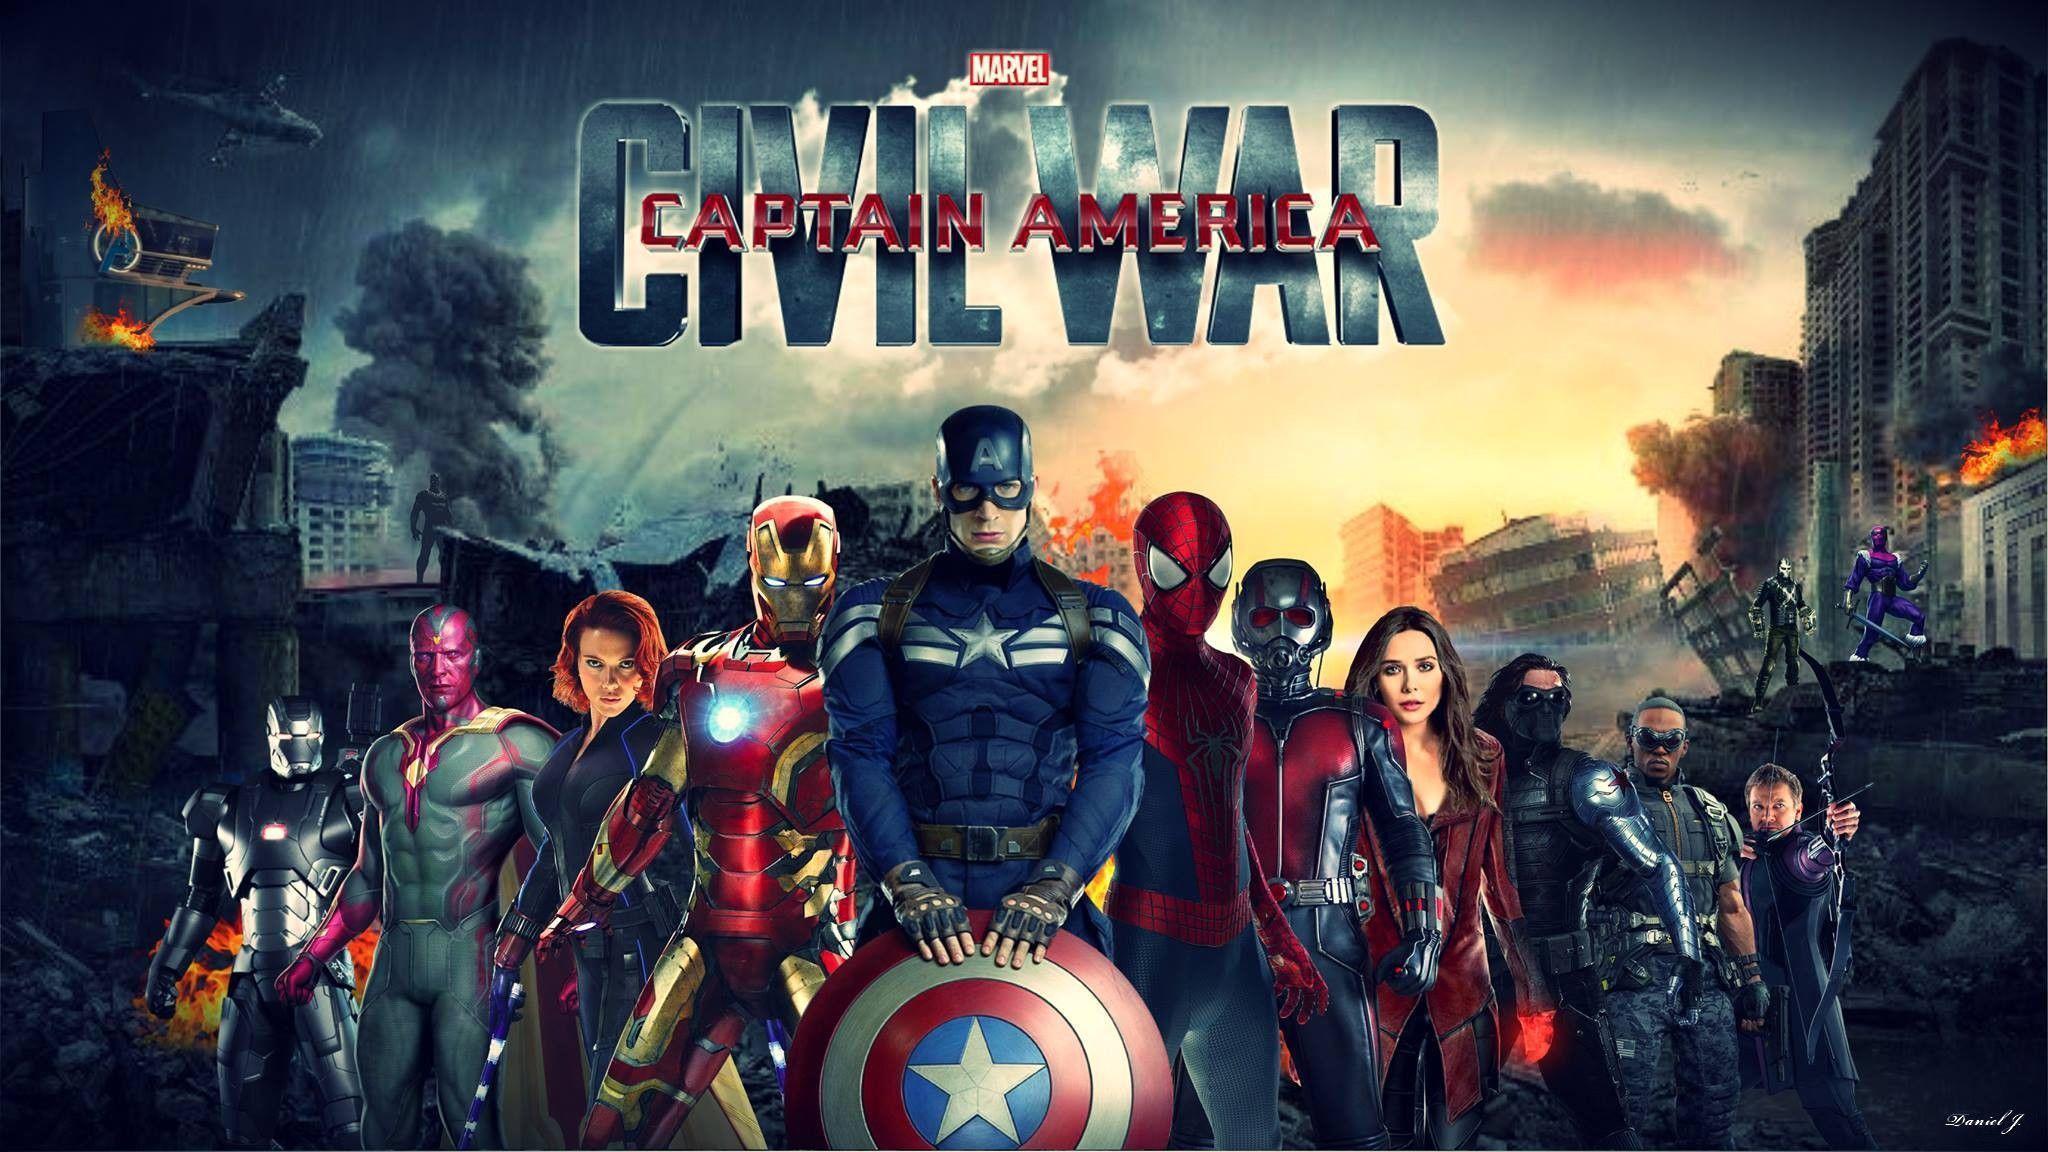 Captain America: Civil War Wallpaper Image Photo Picture